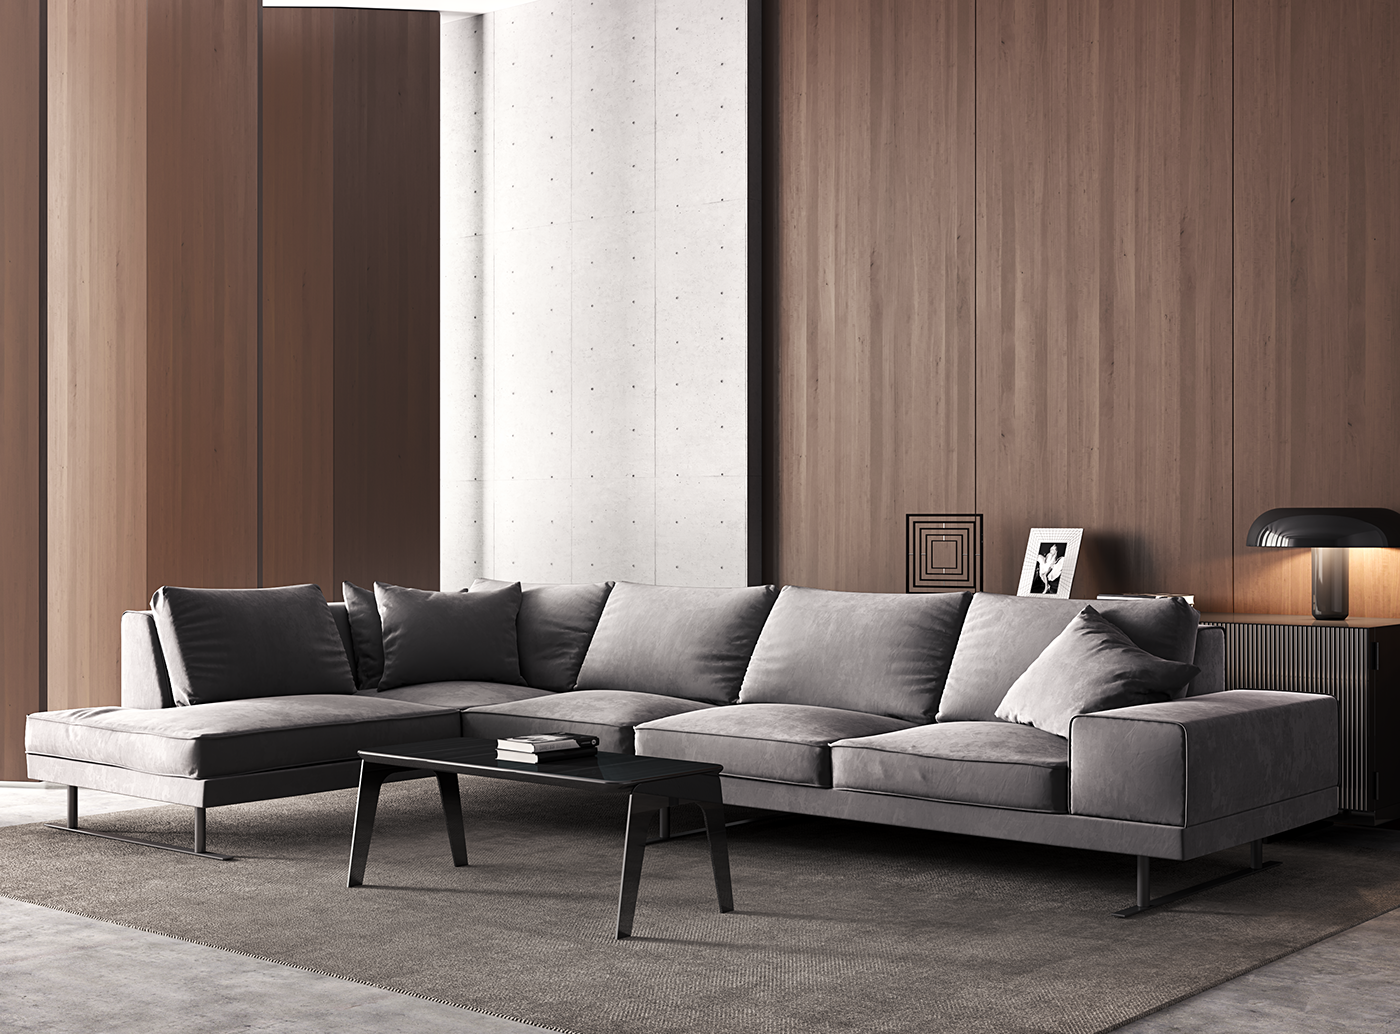 coronarenderer 3dsmax Interior sofa design visualization Vizualization CG Render